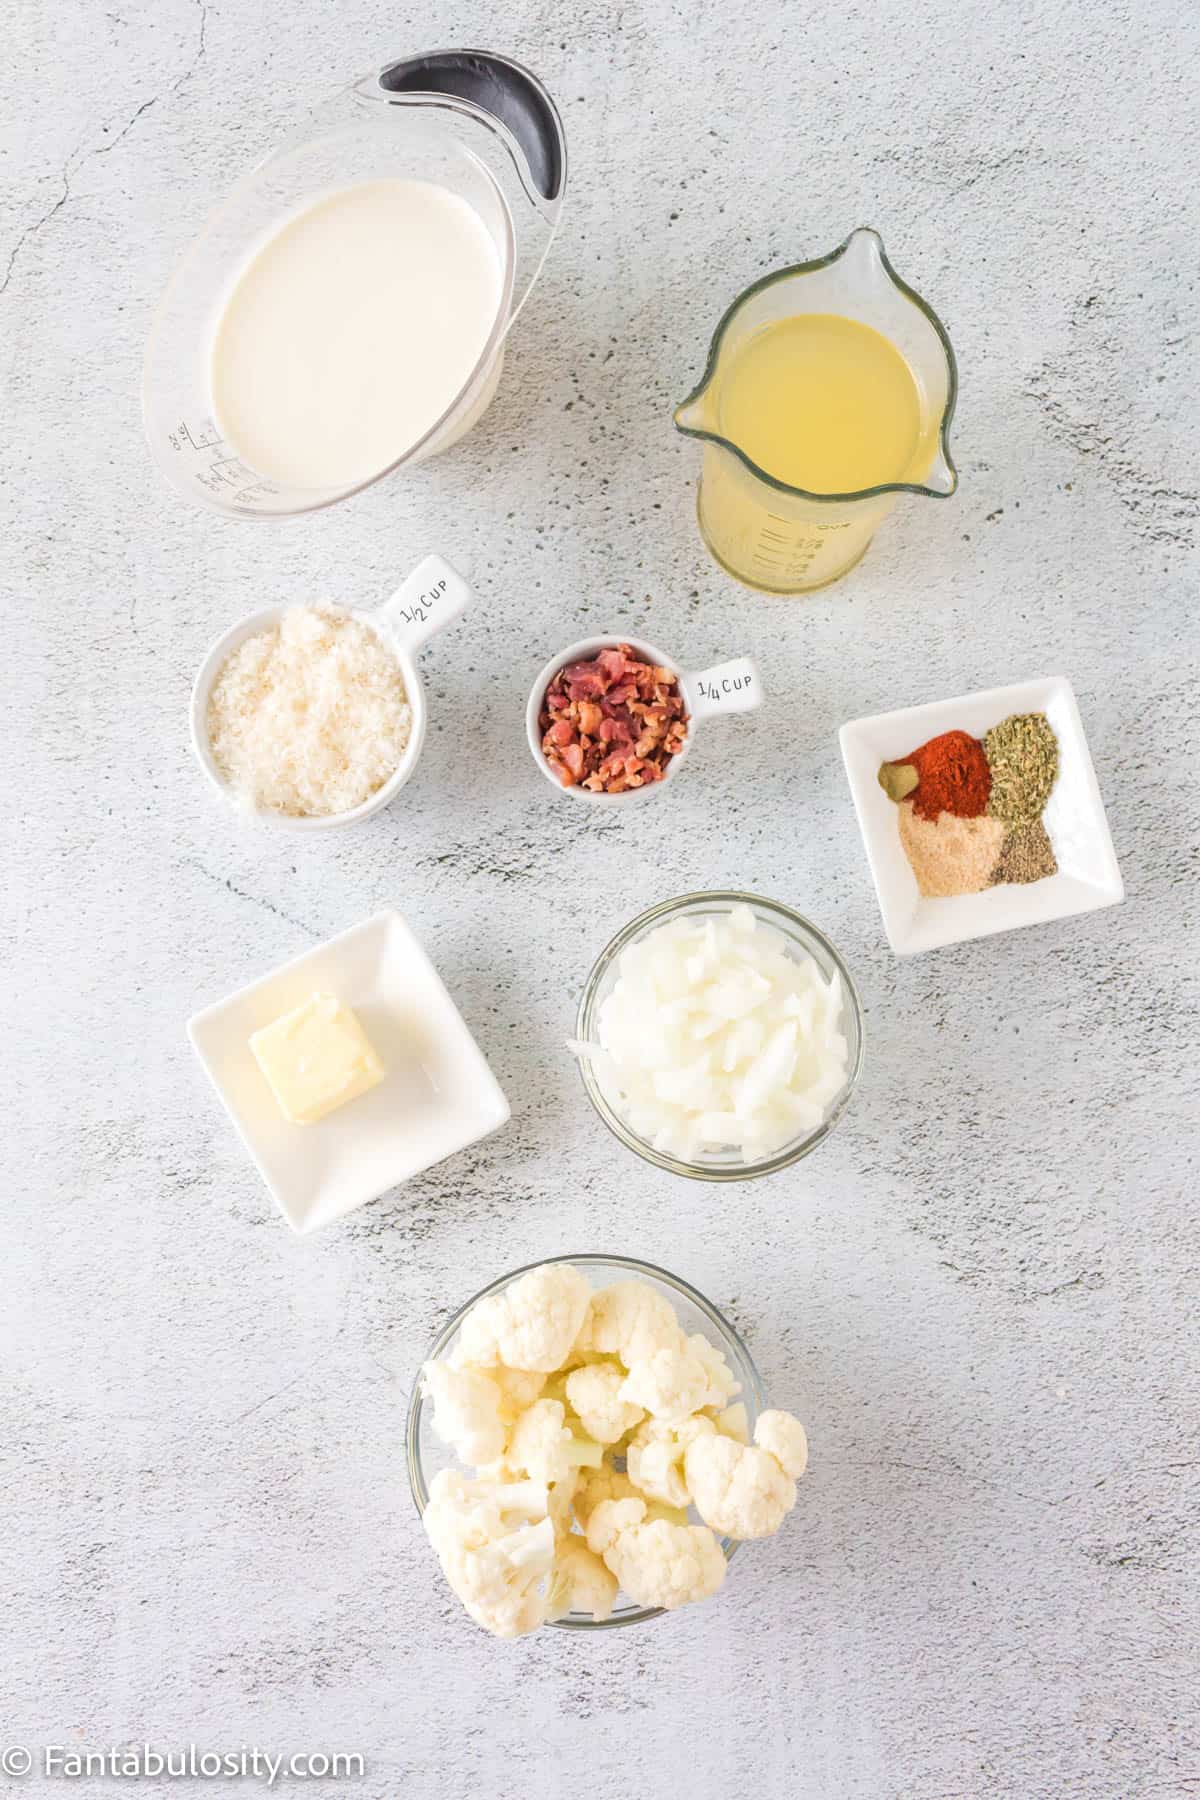 Ingredients for Instant Pot Cauliflower Soup